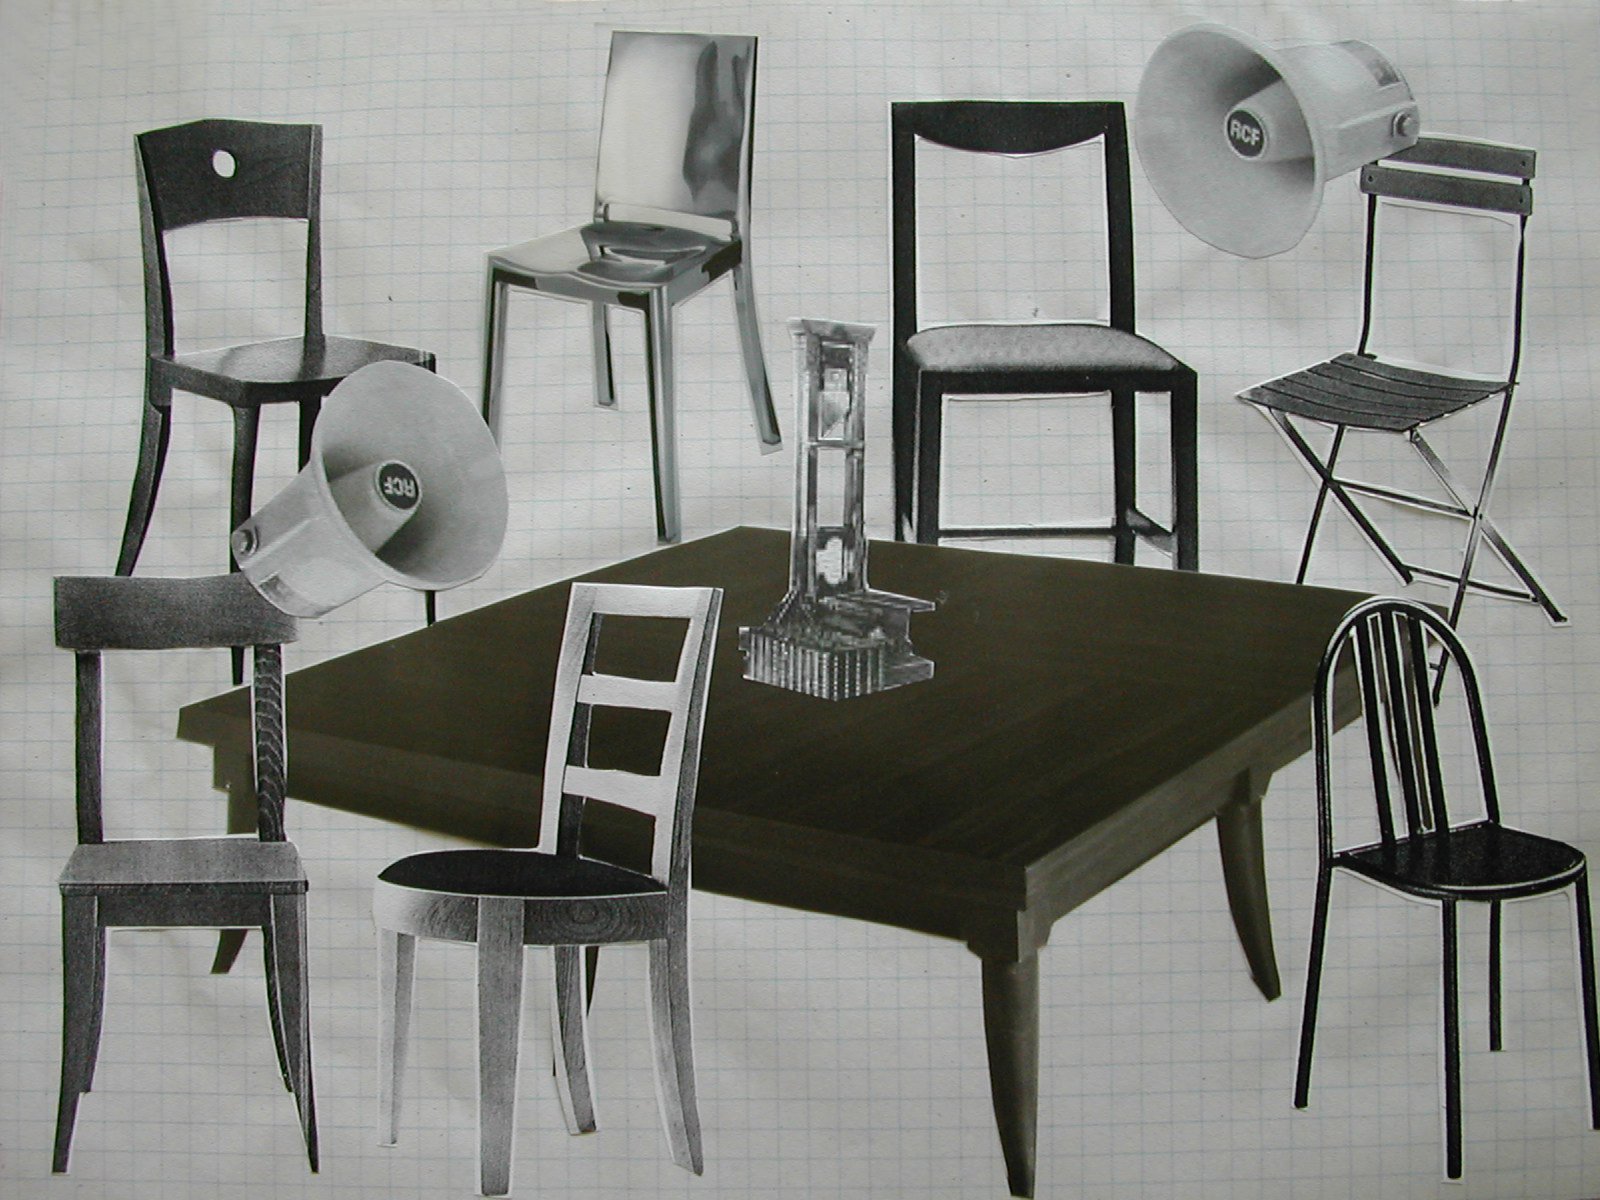 Liliana Moro, Un mondo senza testa #6, ink and collage on paper, dimensions variable, 2003. Installation view, Liliana Moro, A World With No Head, 1301PE, Los Angeles, 2003